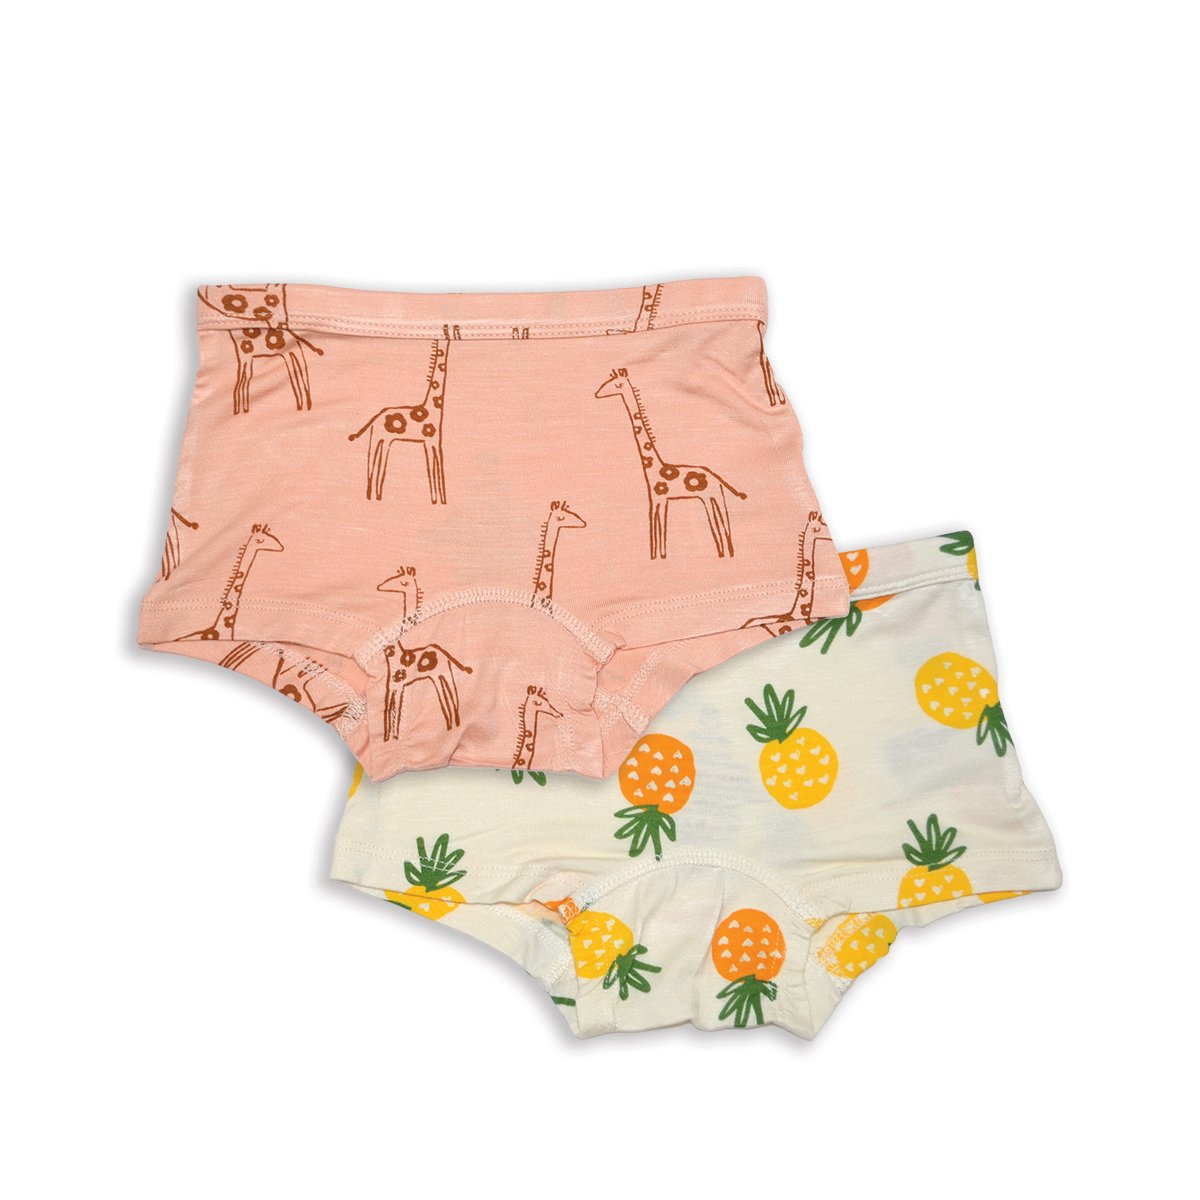 Bamboo Girls Boyshorts Underwear 2 pack (Daisy Giraffe/Pineapple Love 